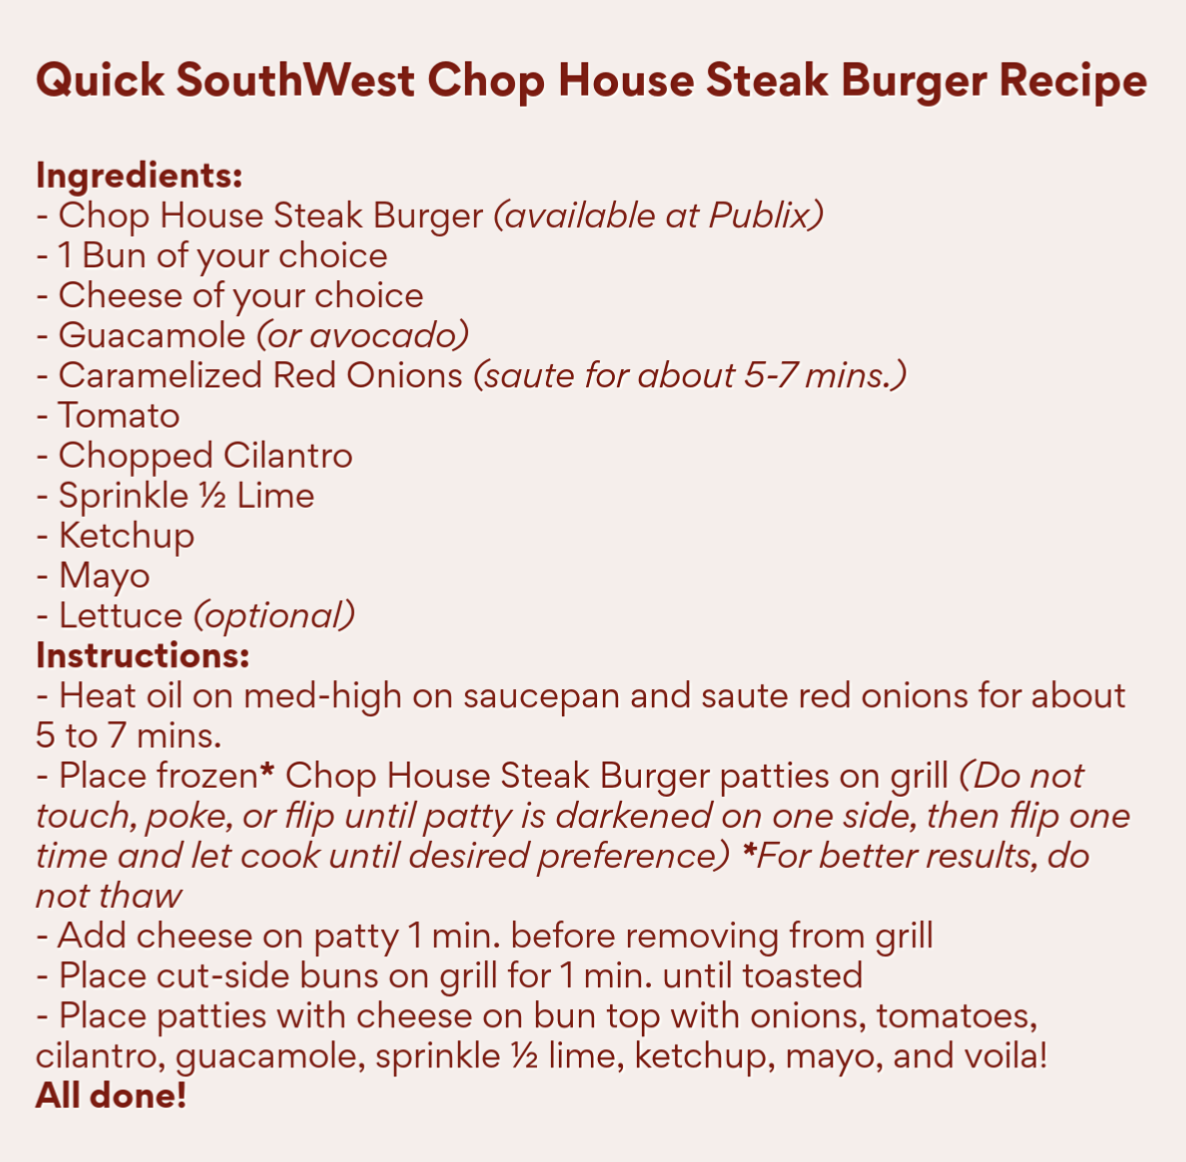 Chop House Steak Burger